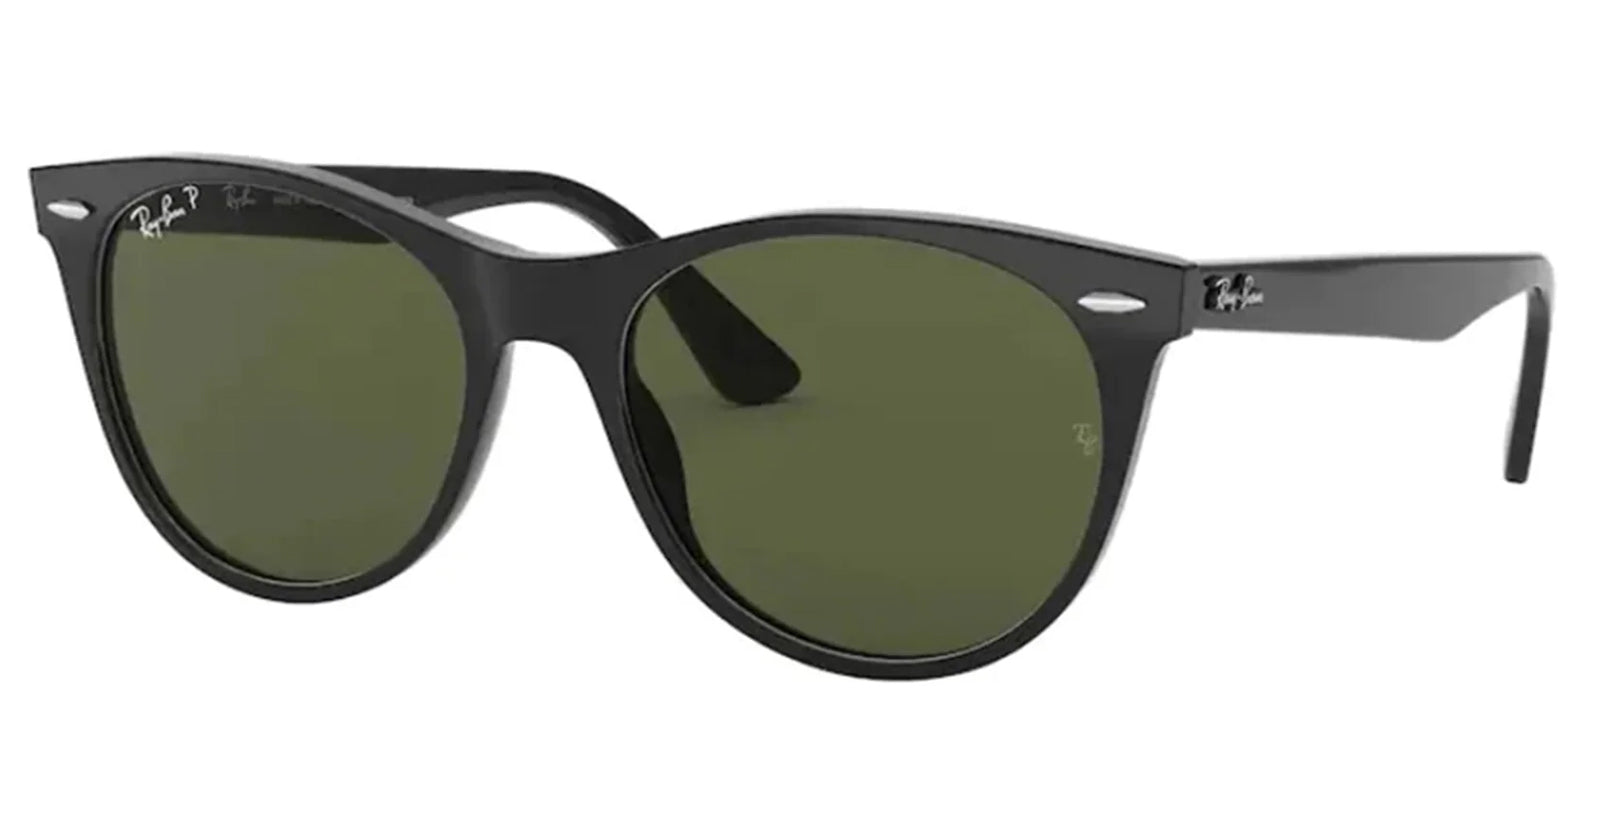 Ray-Ban Wayfarer II Classic Adult Lifestyle Polarized Sunglasses